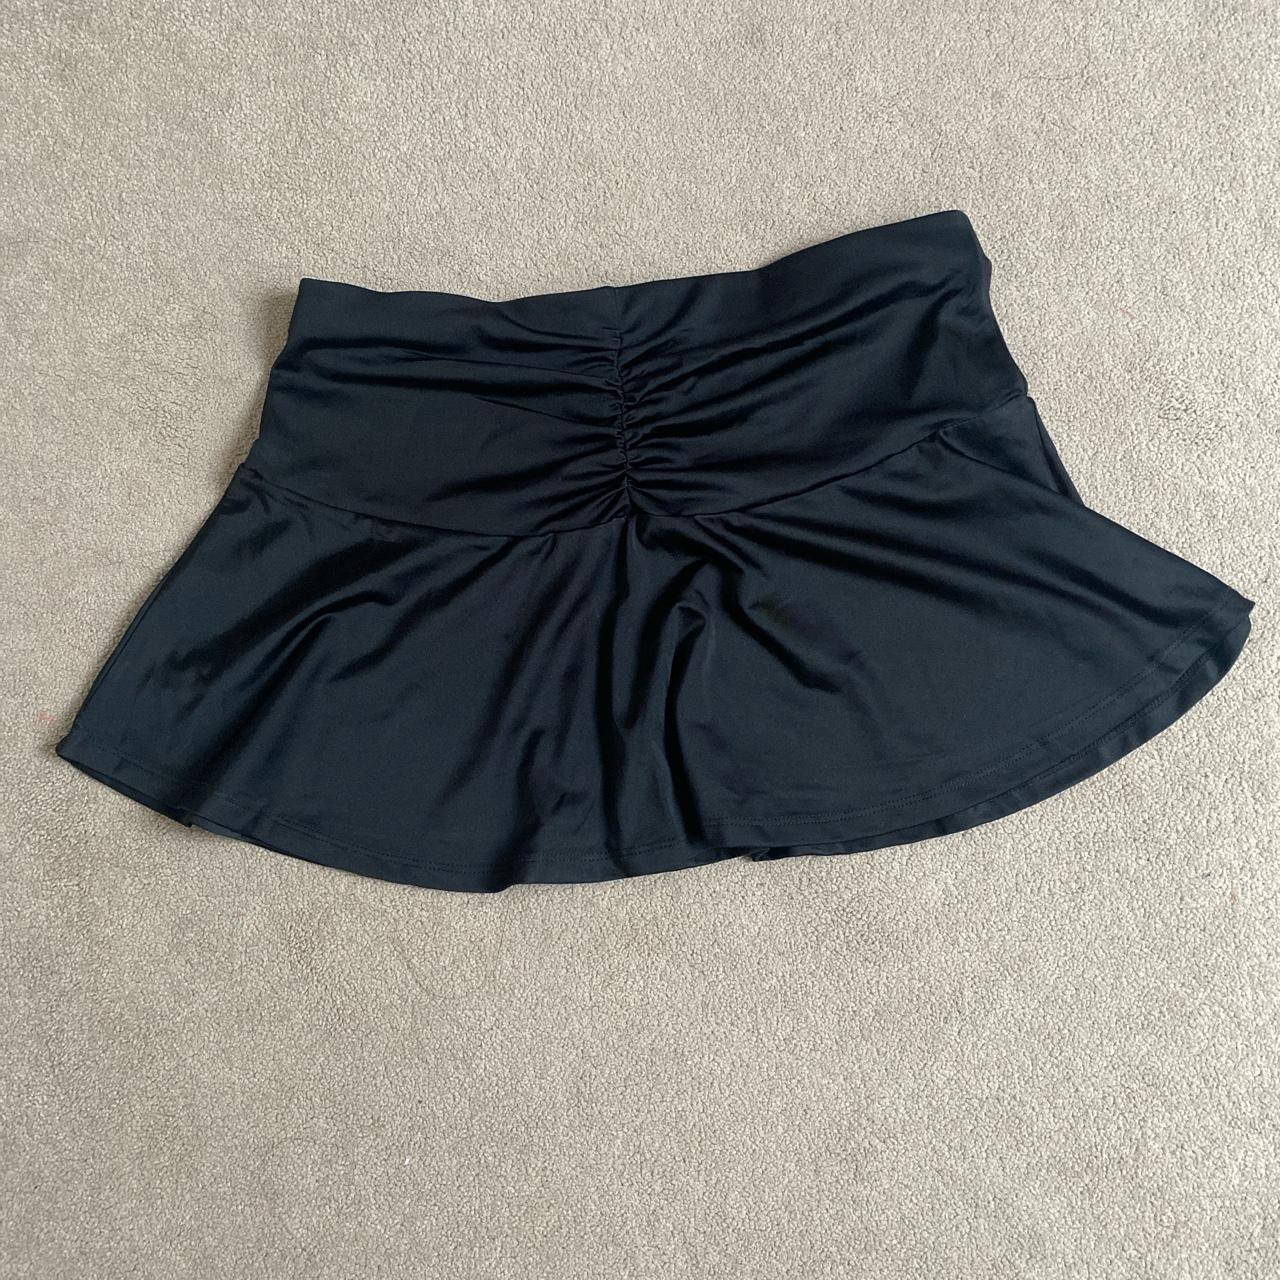 H&M black mini skirt - Depop